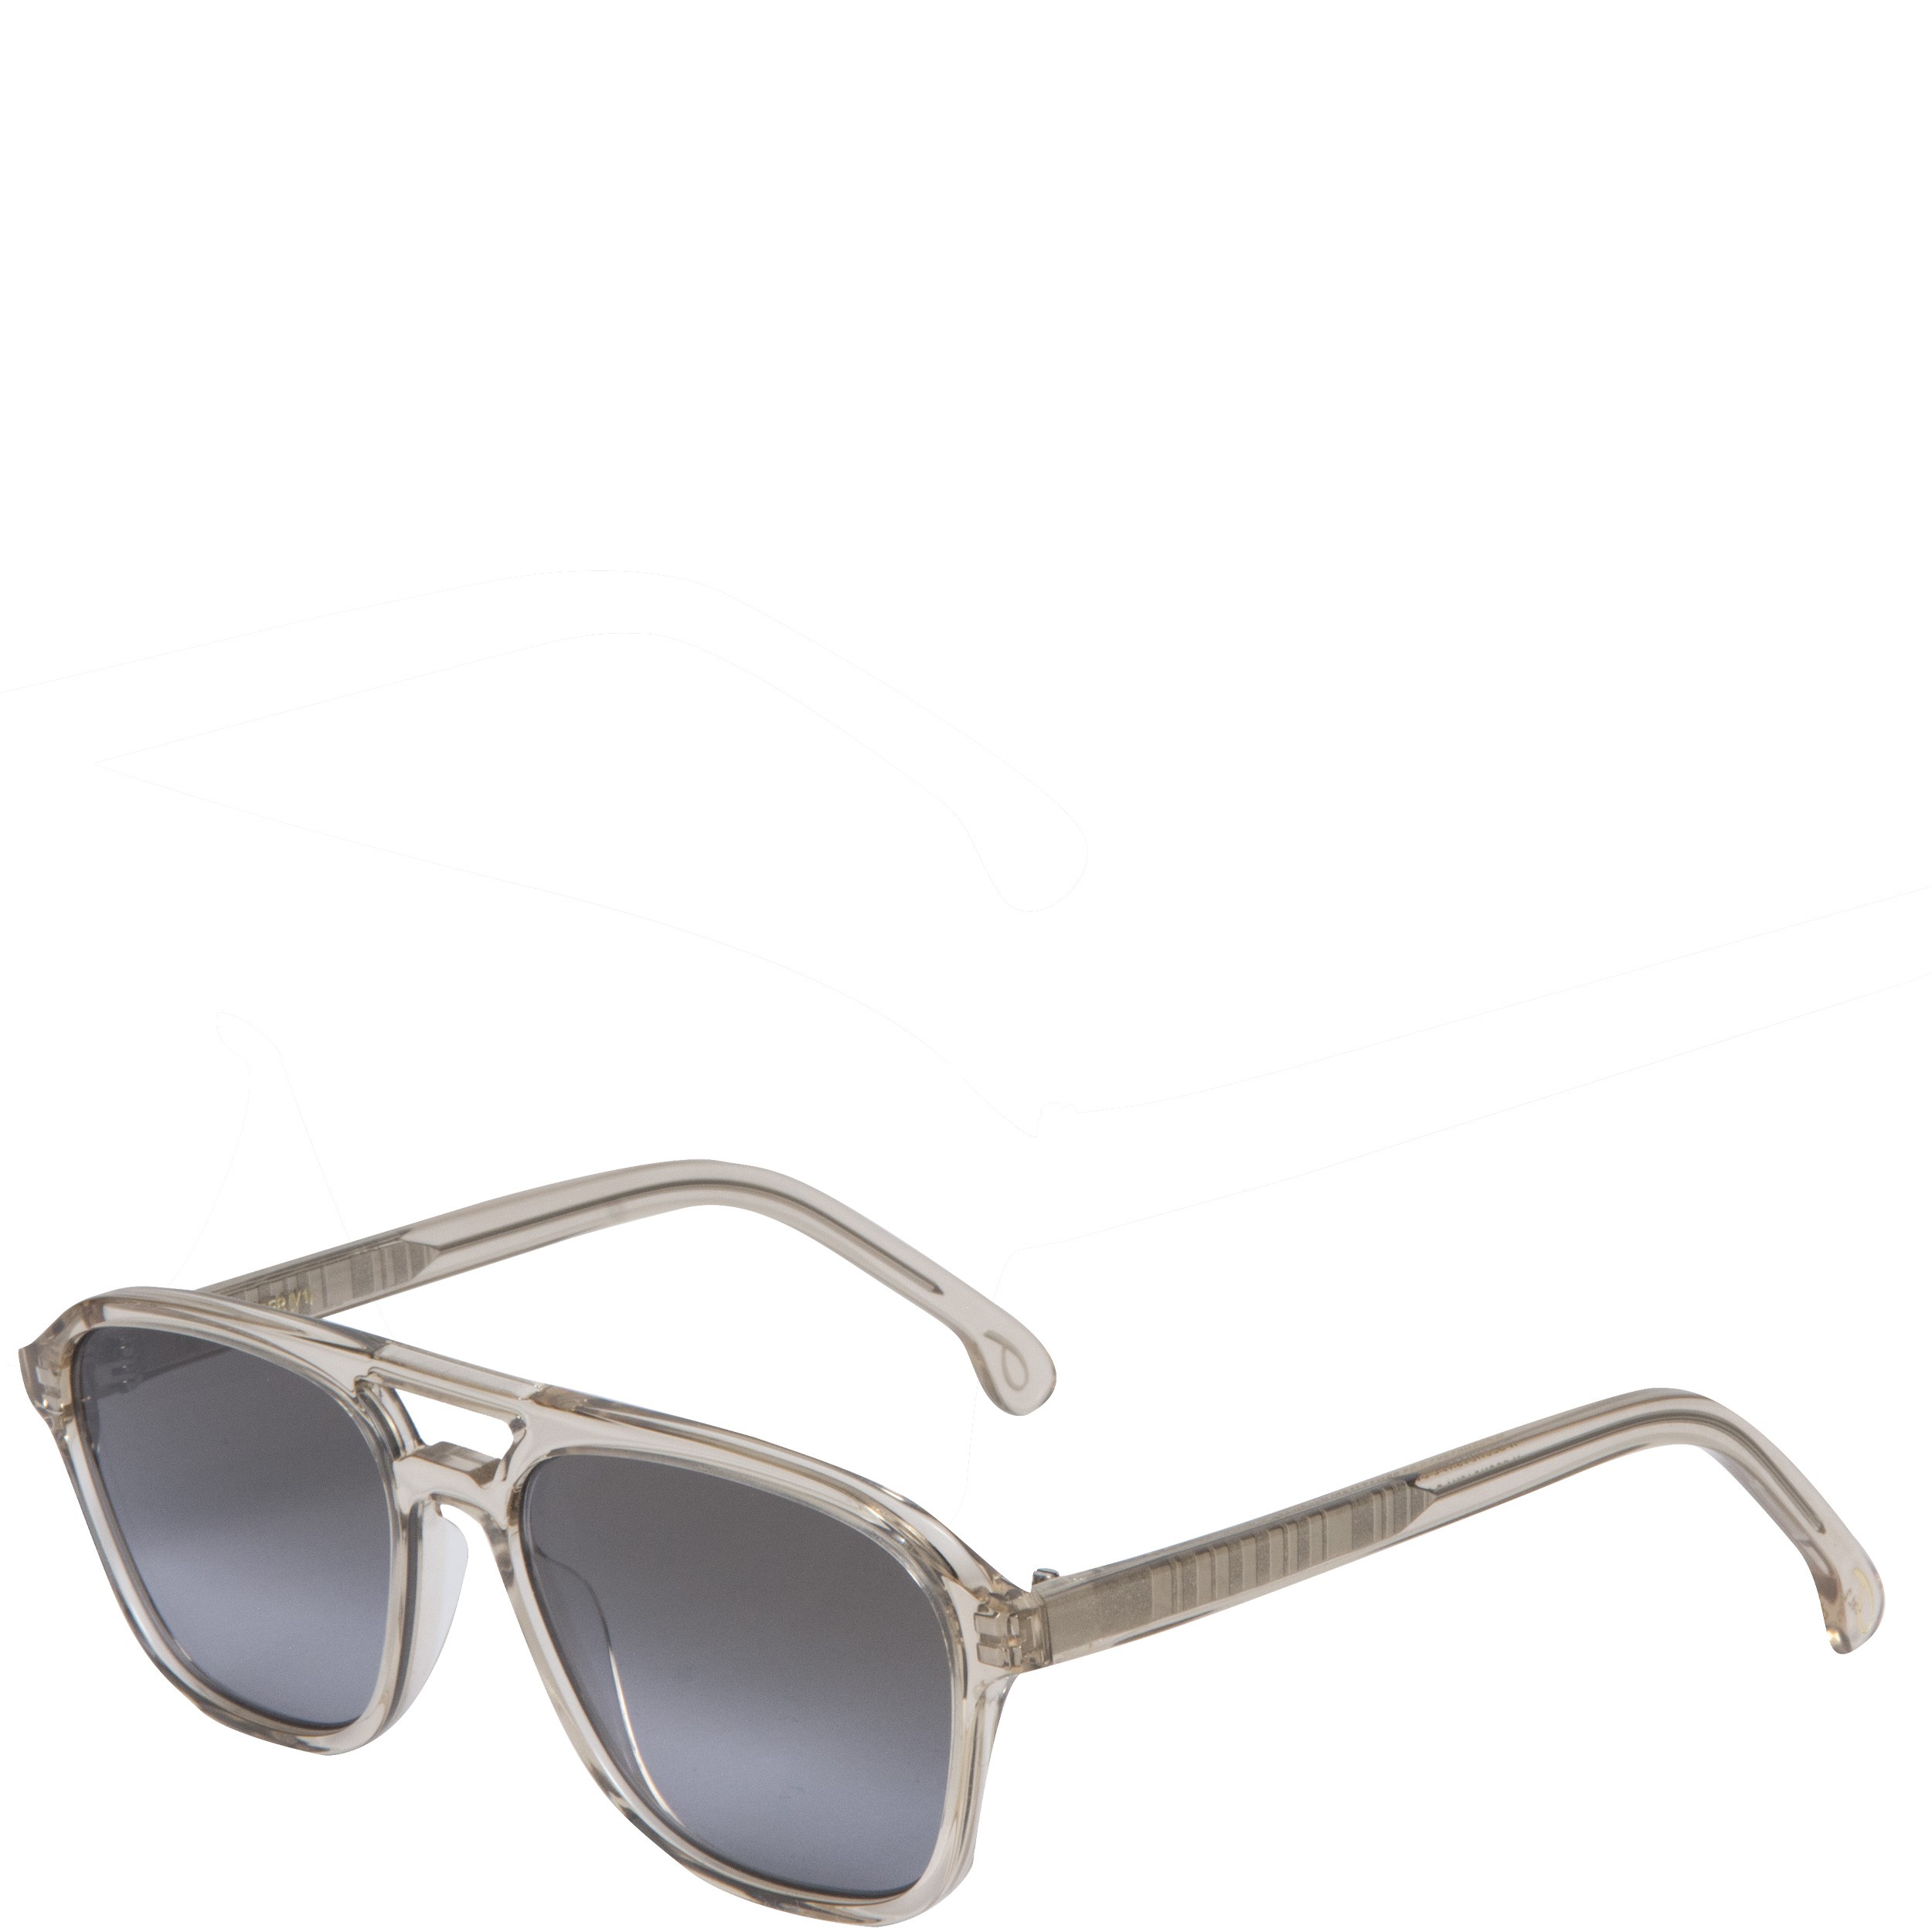 Paul Smith Adler Aviator Sunglasses Warm Grey